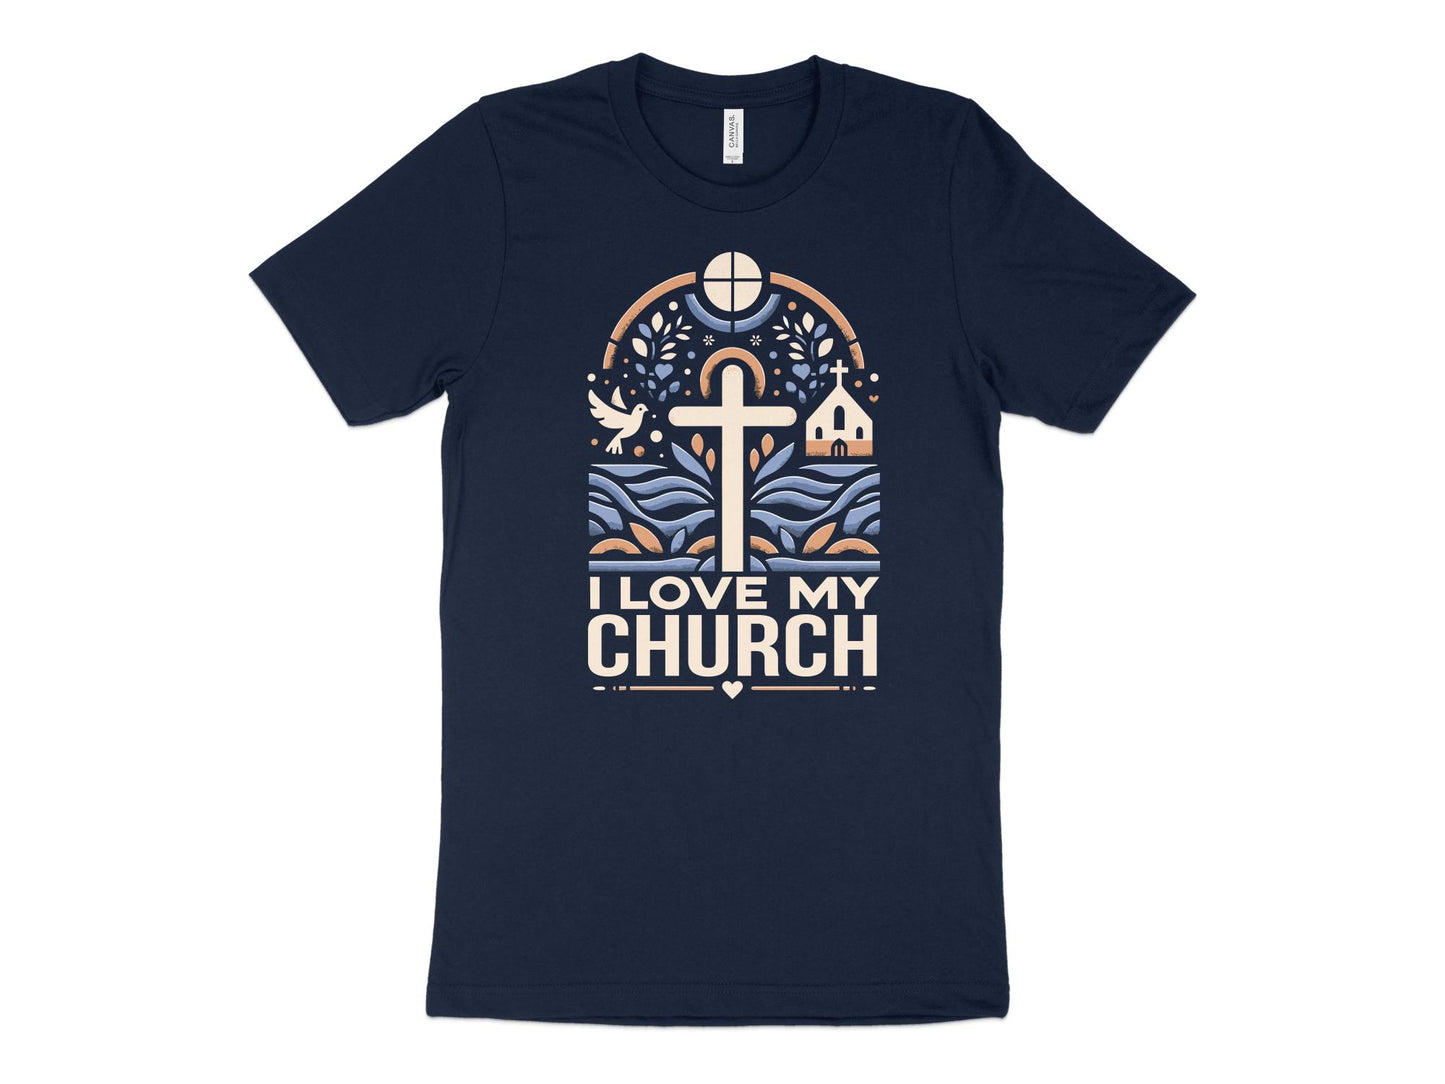 I Love My Church Shirts, navy blue